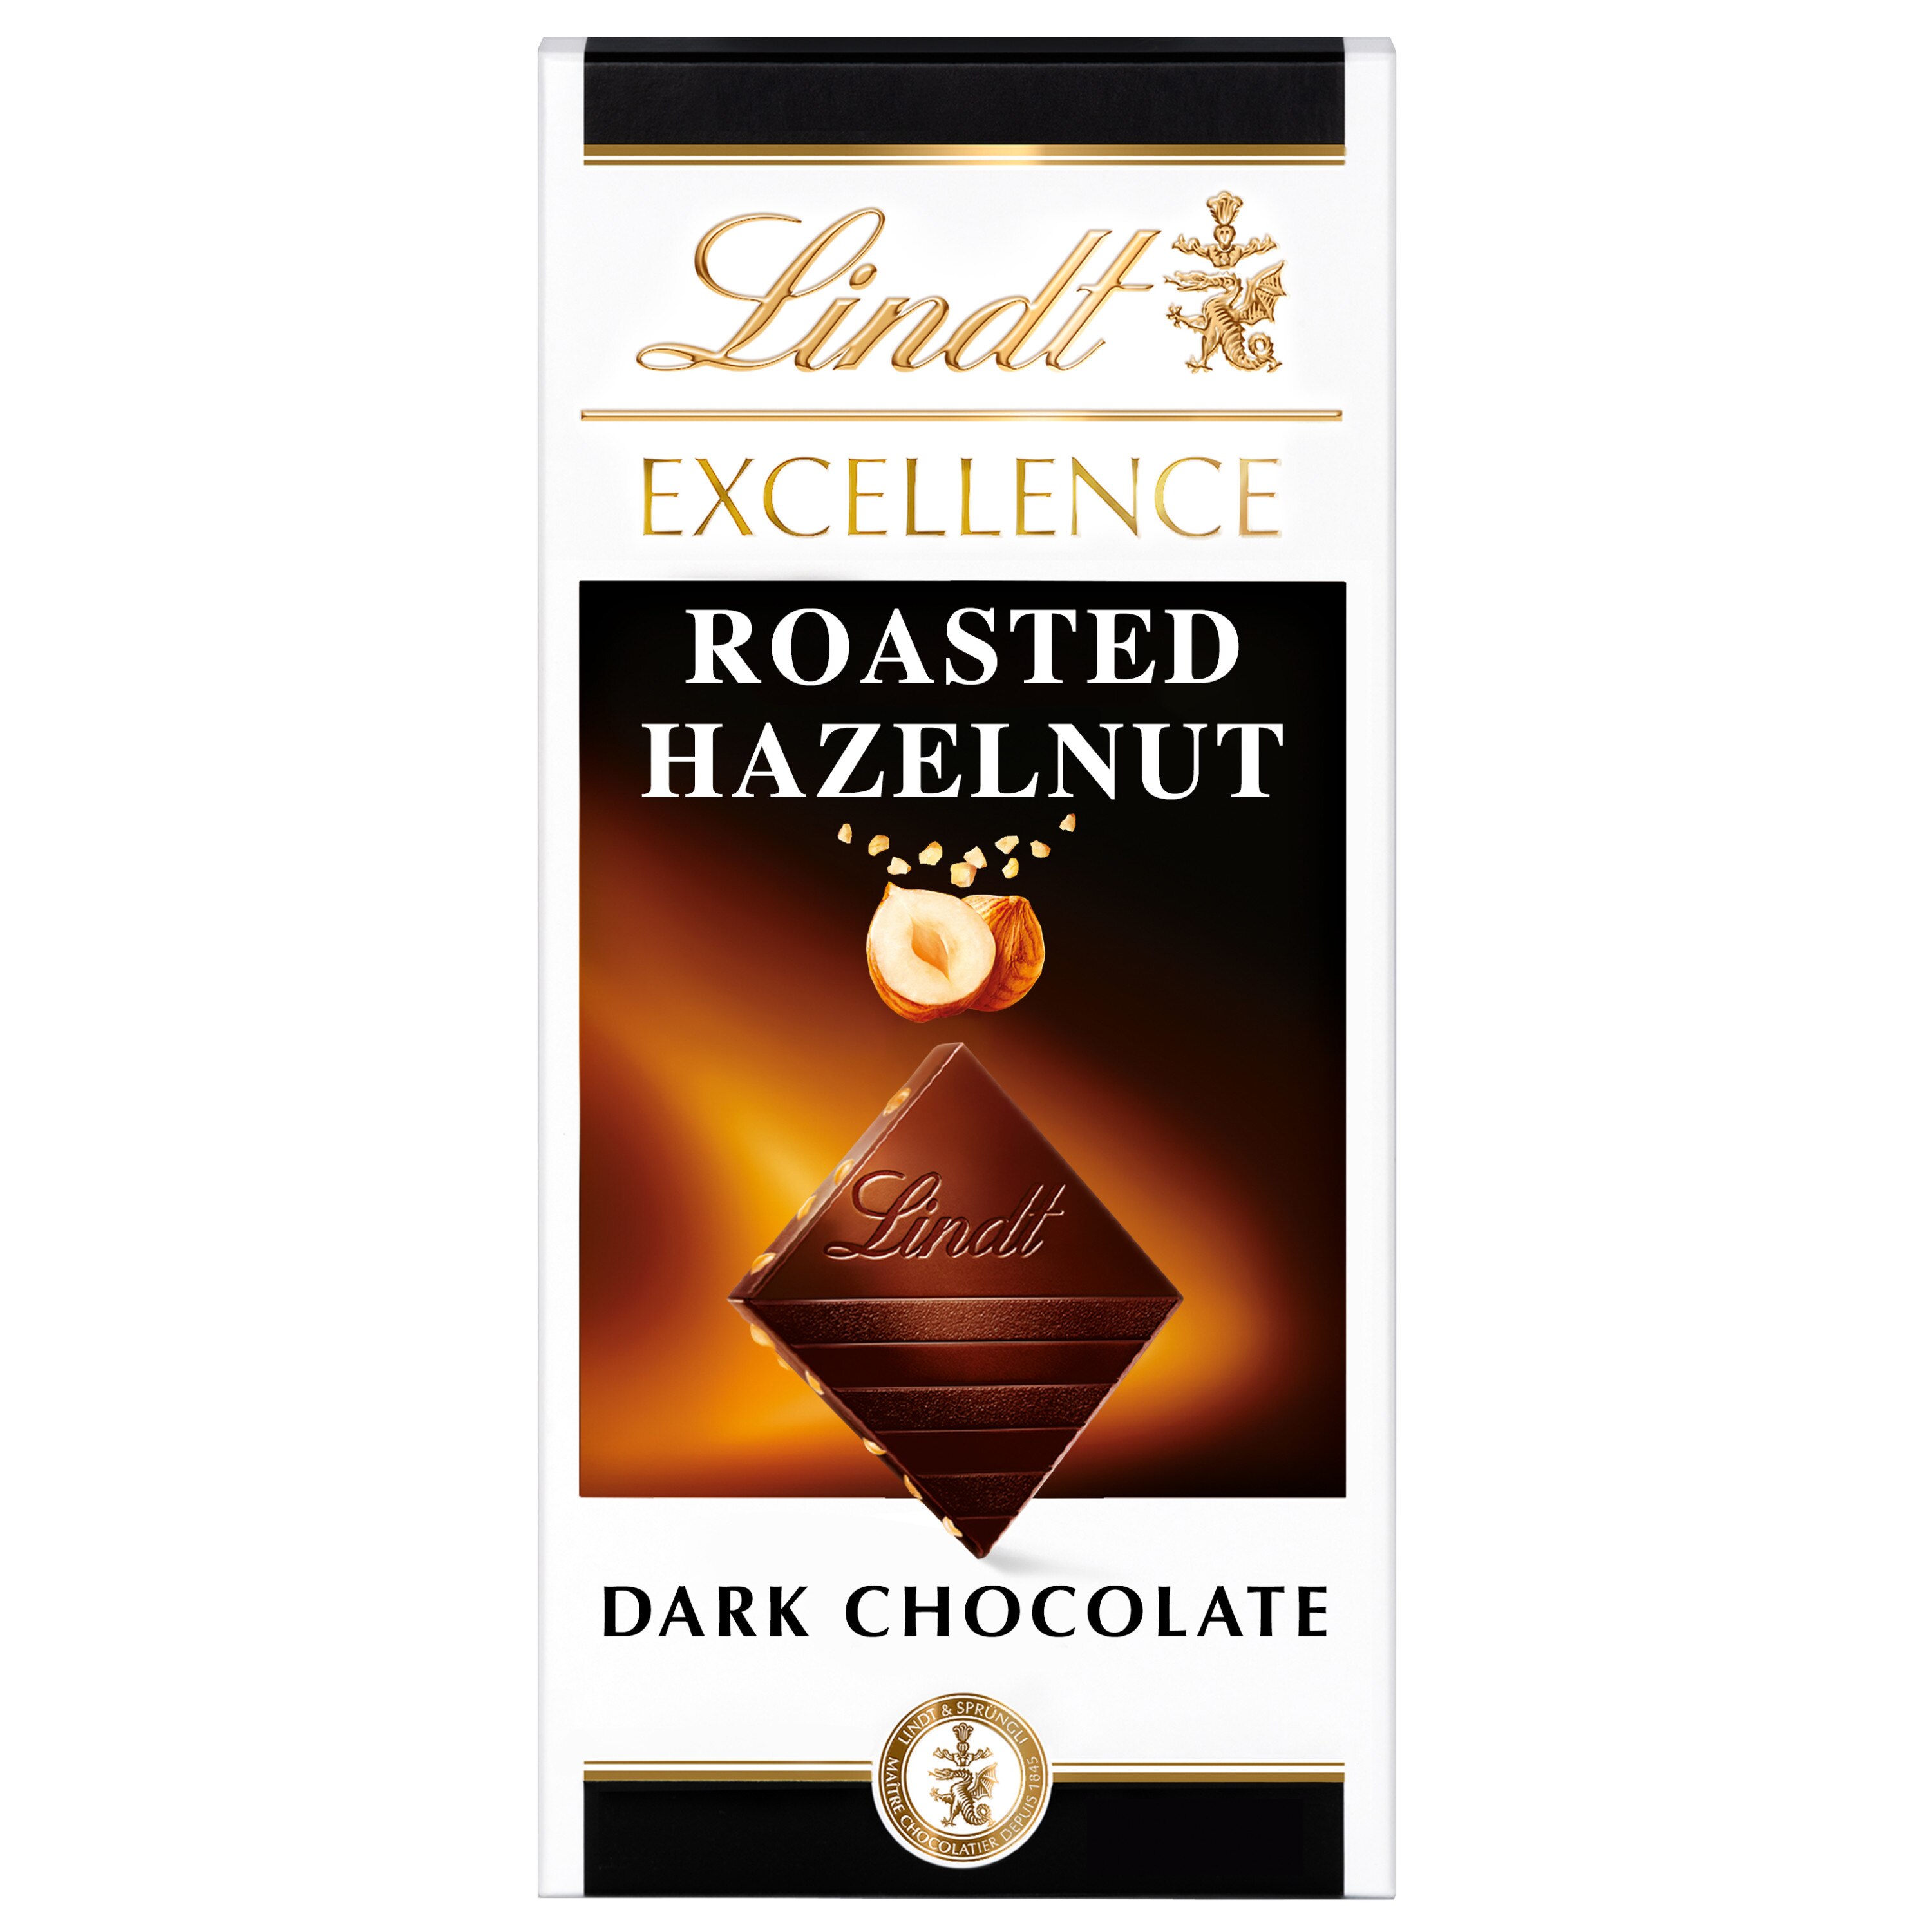 Lindt EXCELLENCE Roasted Hazelnut Dark Chocolate Bar, Dark Chocolate Candy with Roasted Hazelnut Pieces, 3.5 oz. Bar